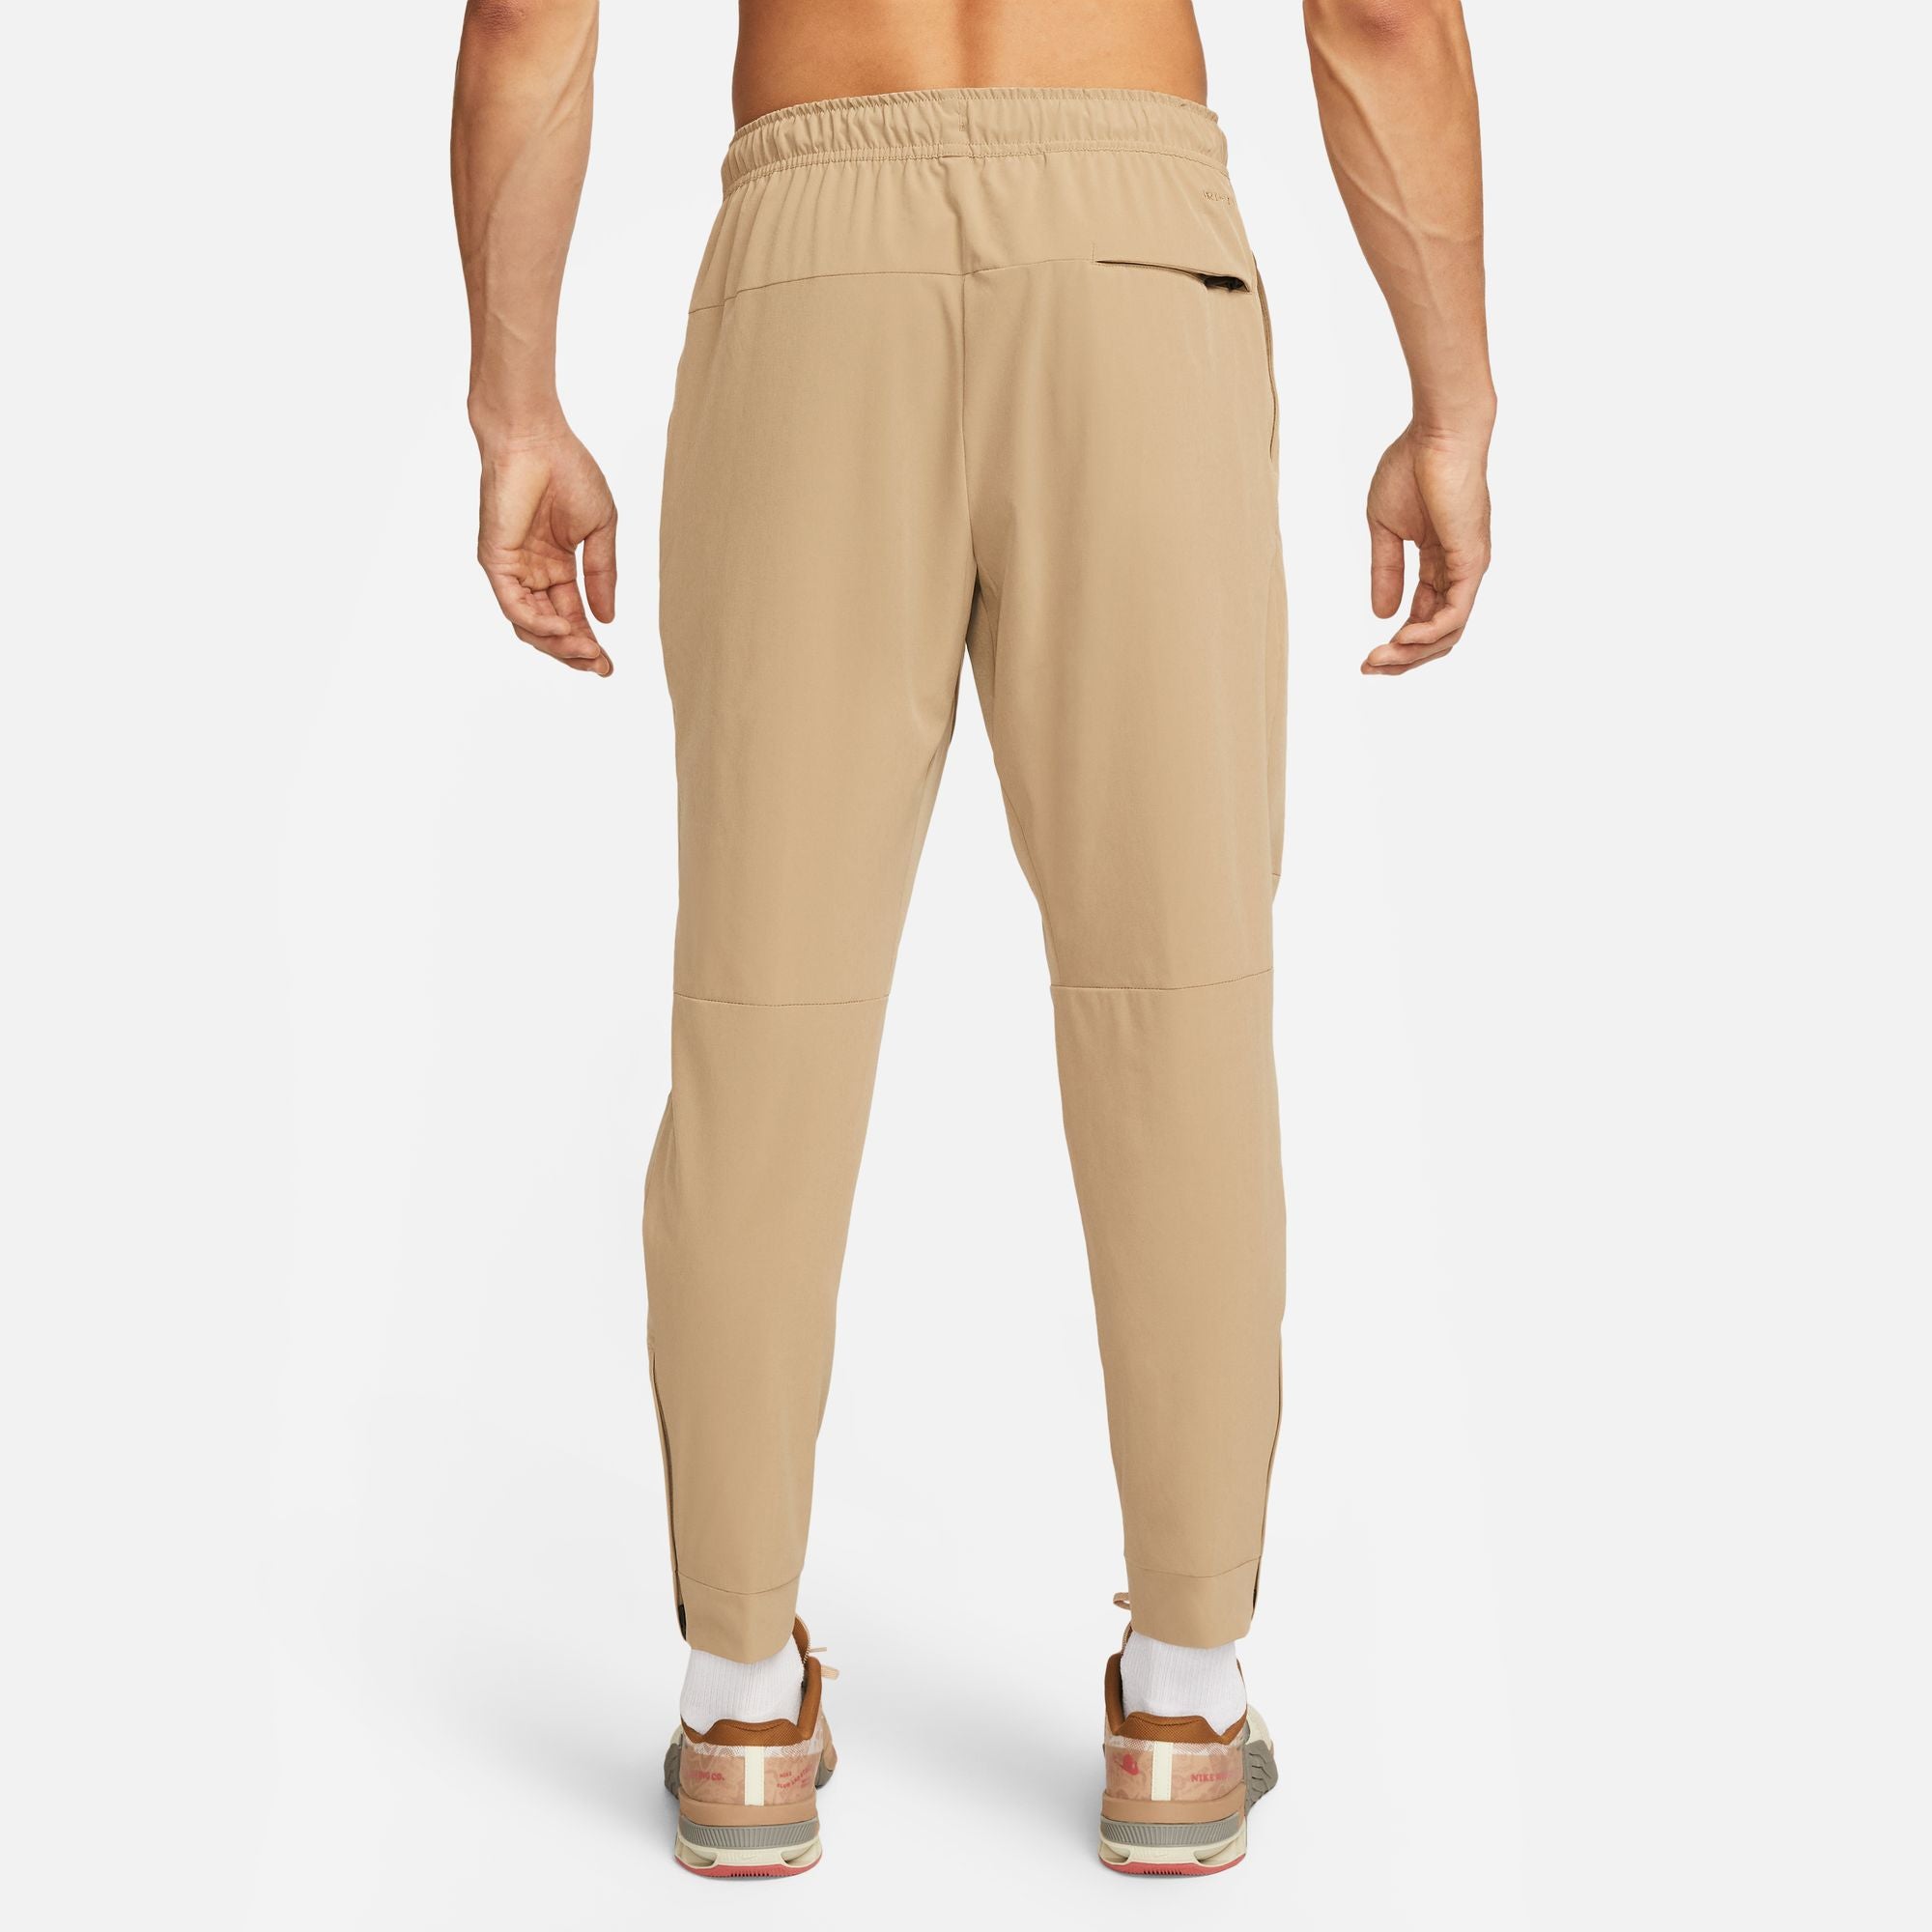 Nike Unlimited jogging pants - Beige